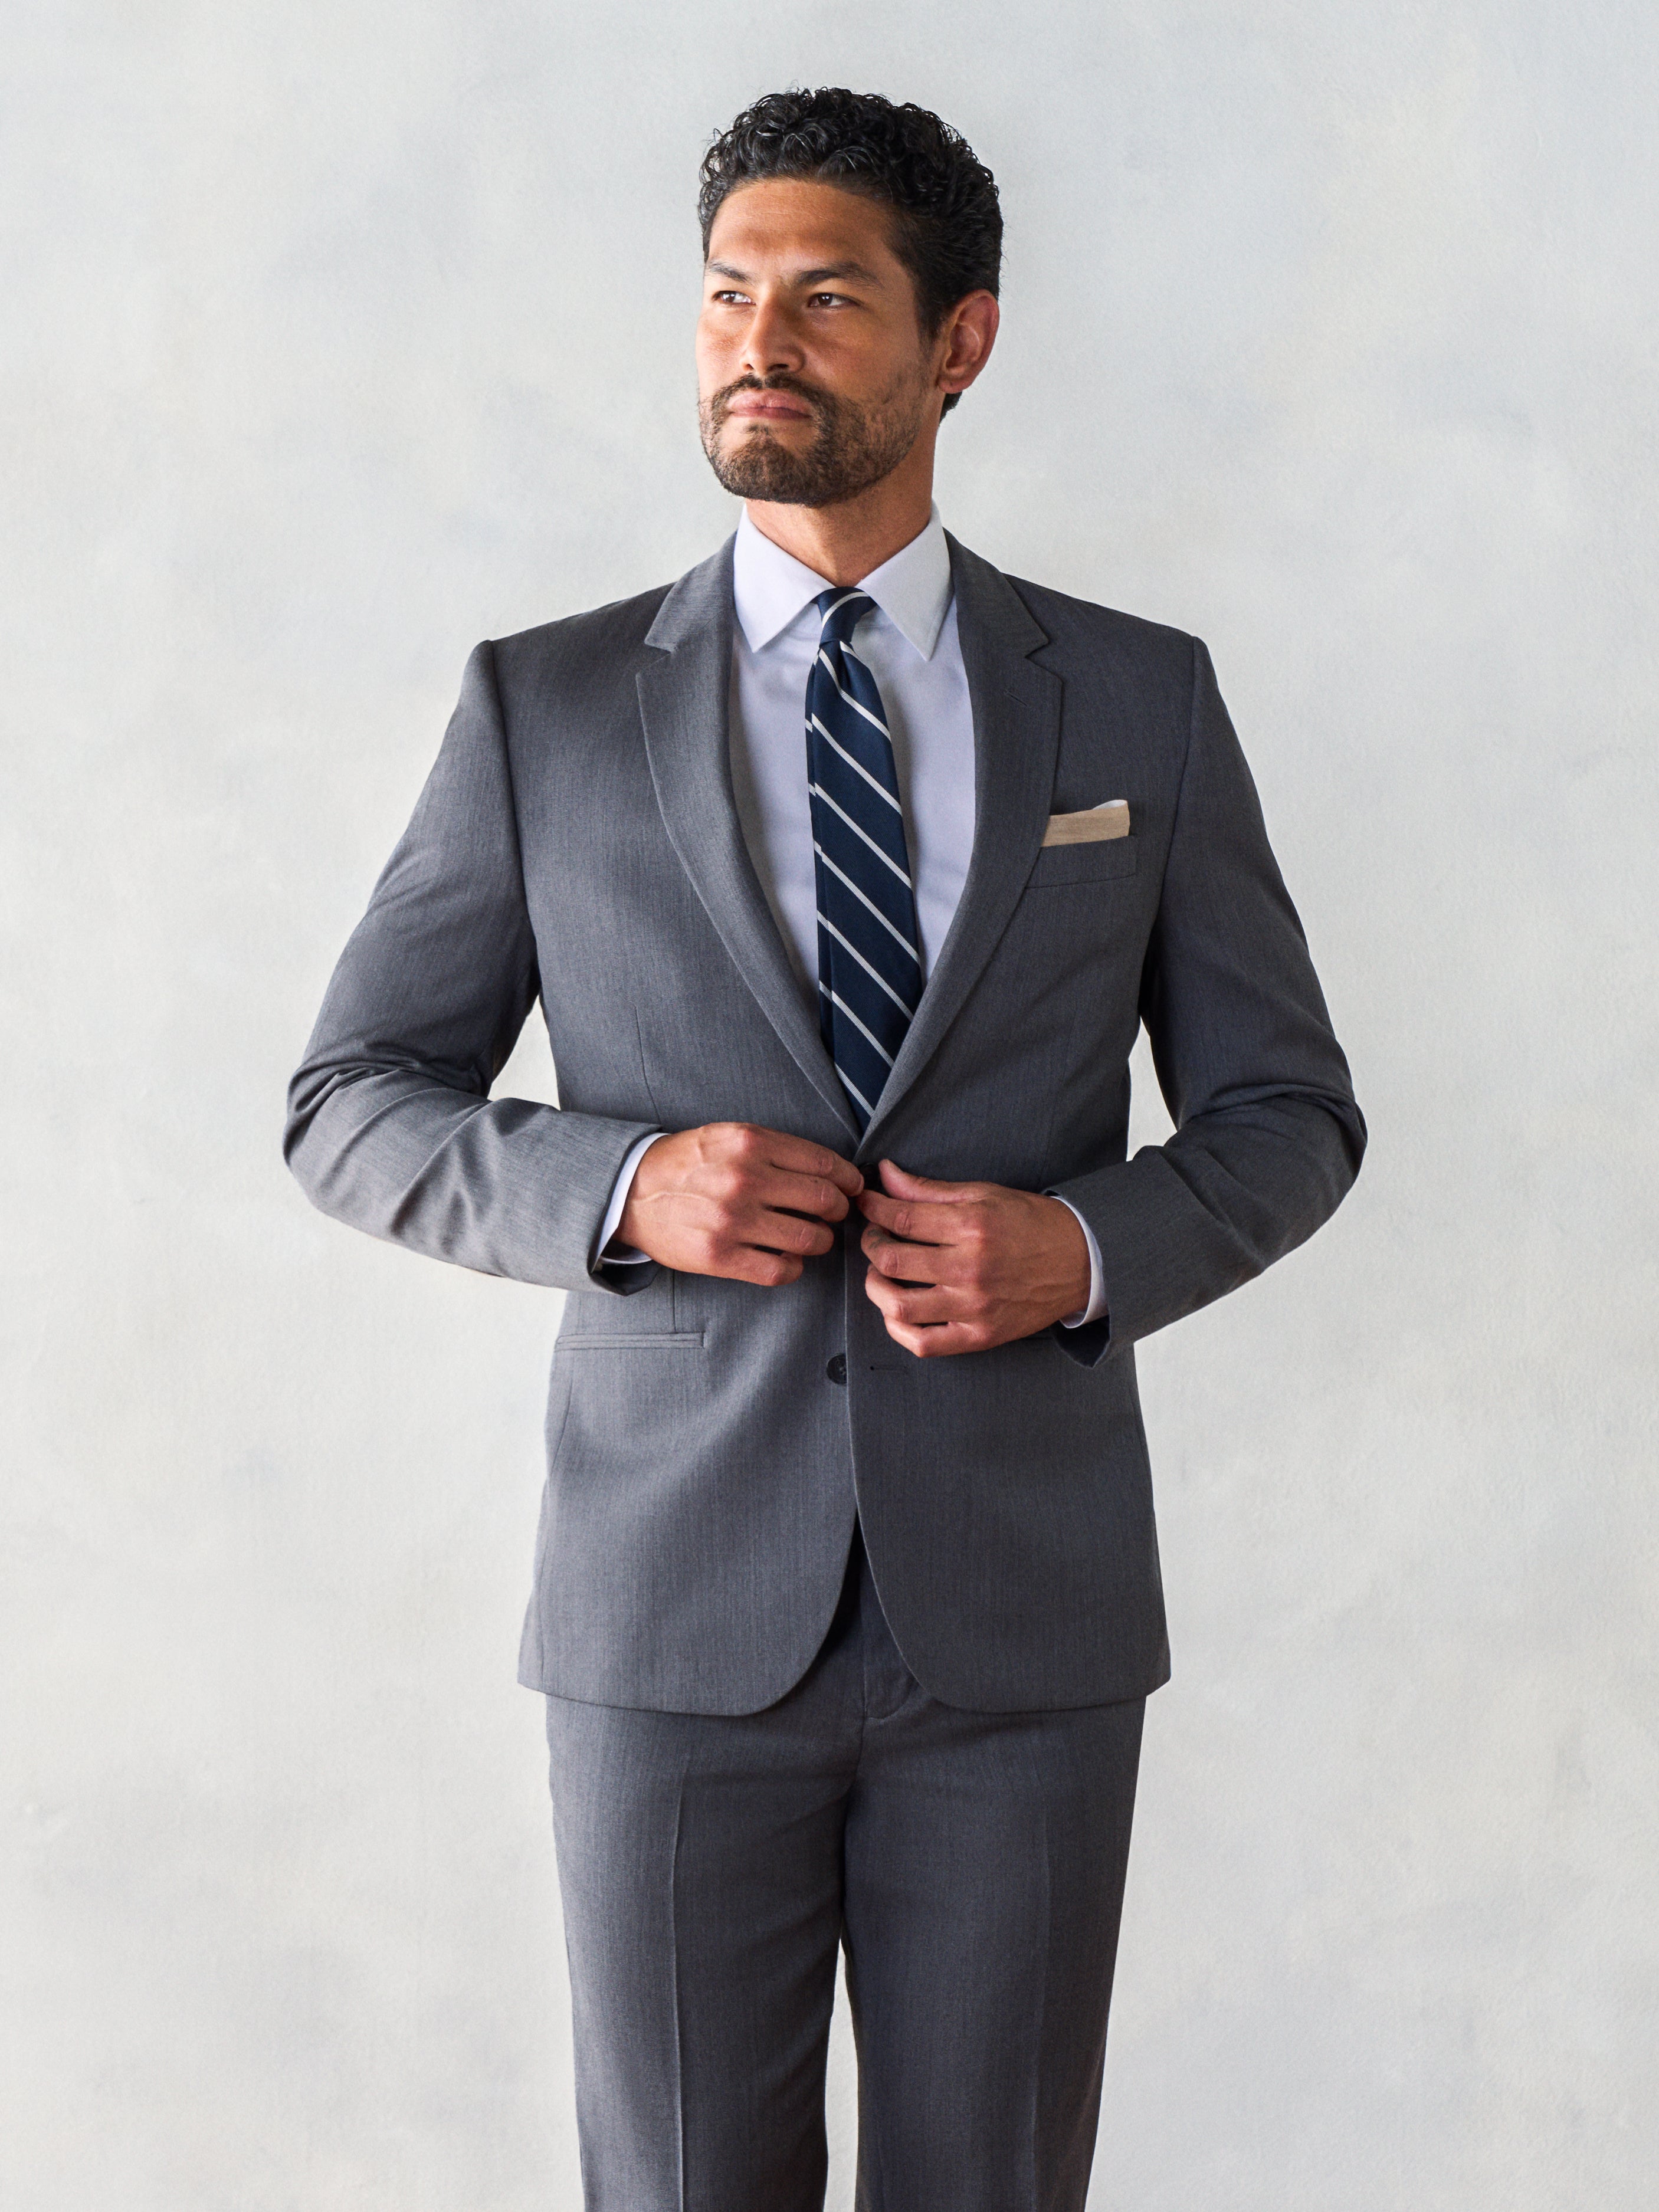 Men's Suits Clearance | Discounts + Sales | JoS. A. Bank Clothiers